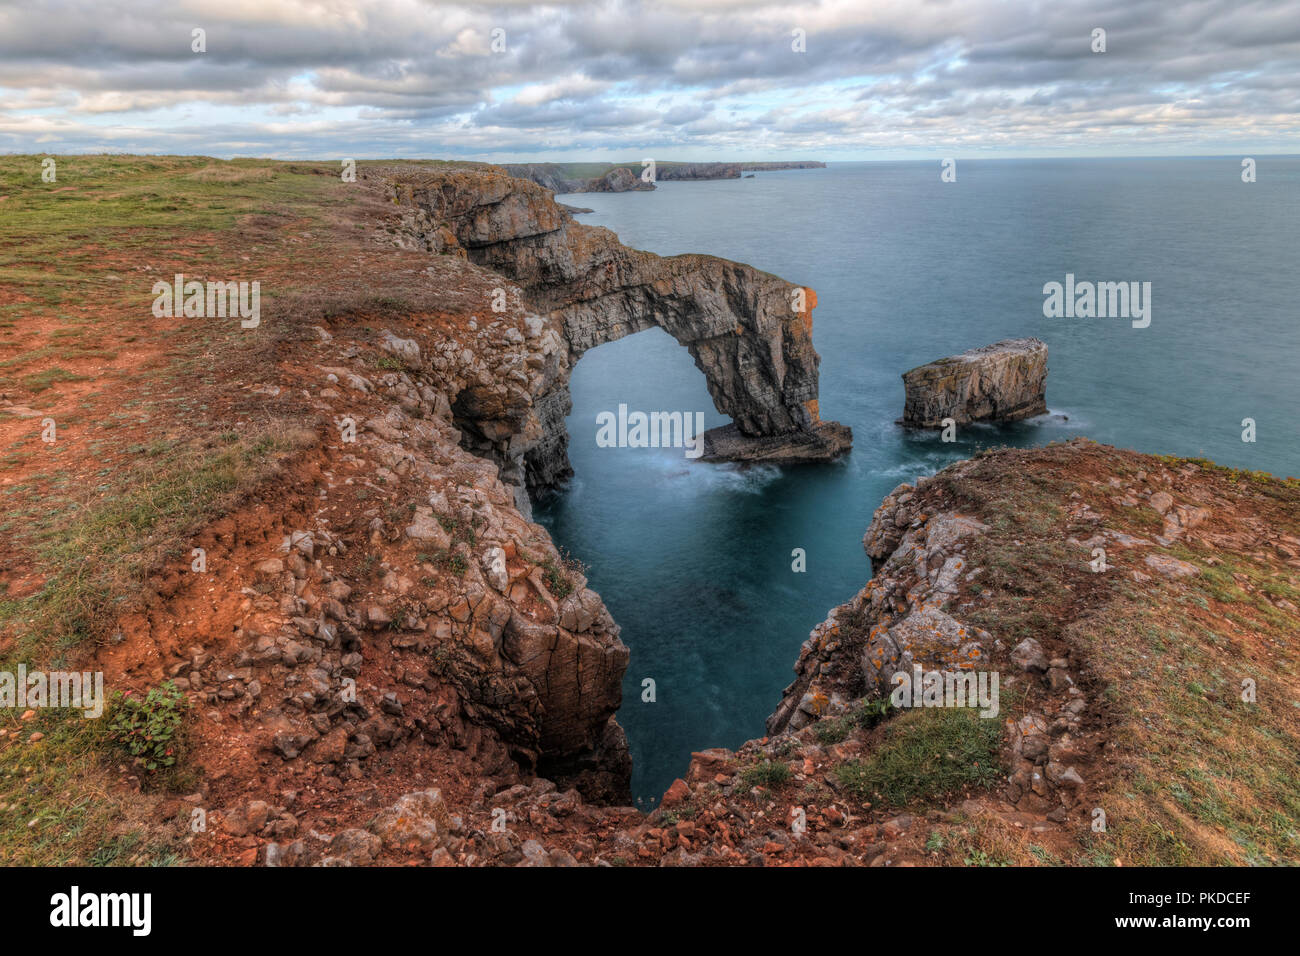 Green Bridge of Wales, Tenby, Pembrokeshire, Wales, UK, Europe Stock Photo